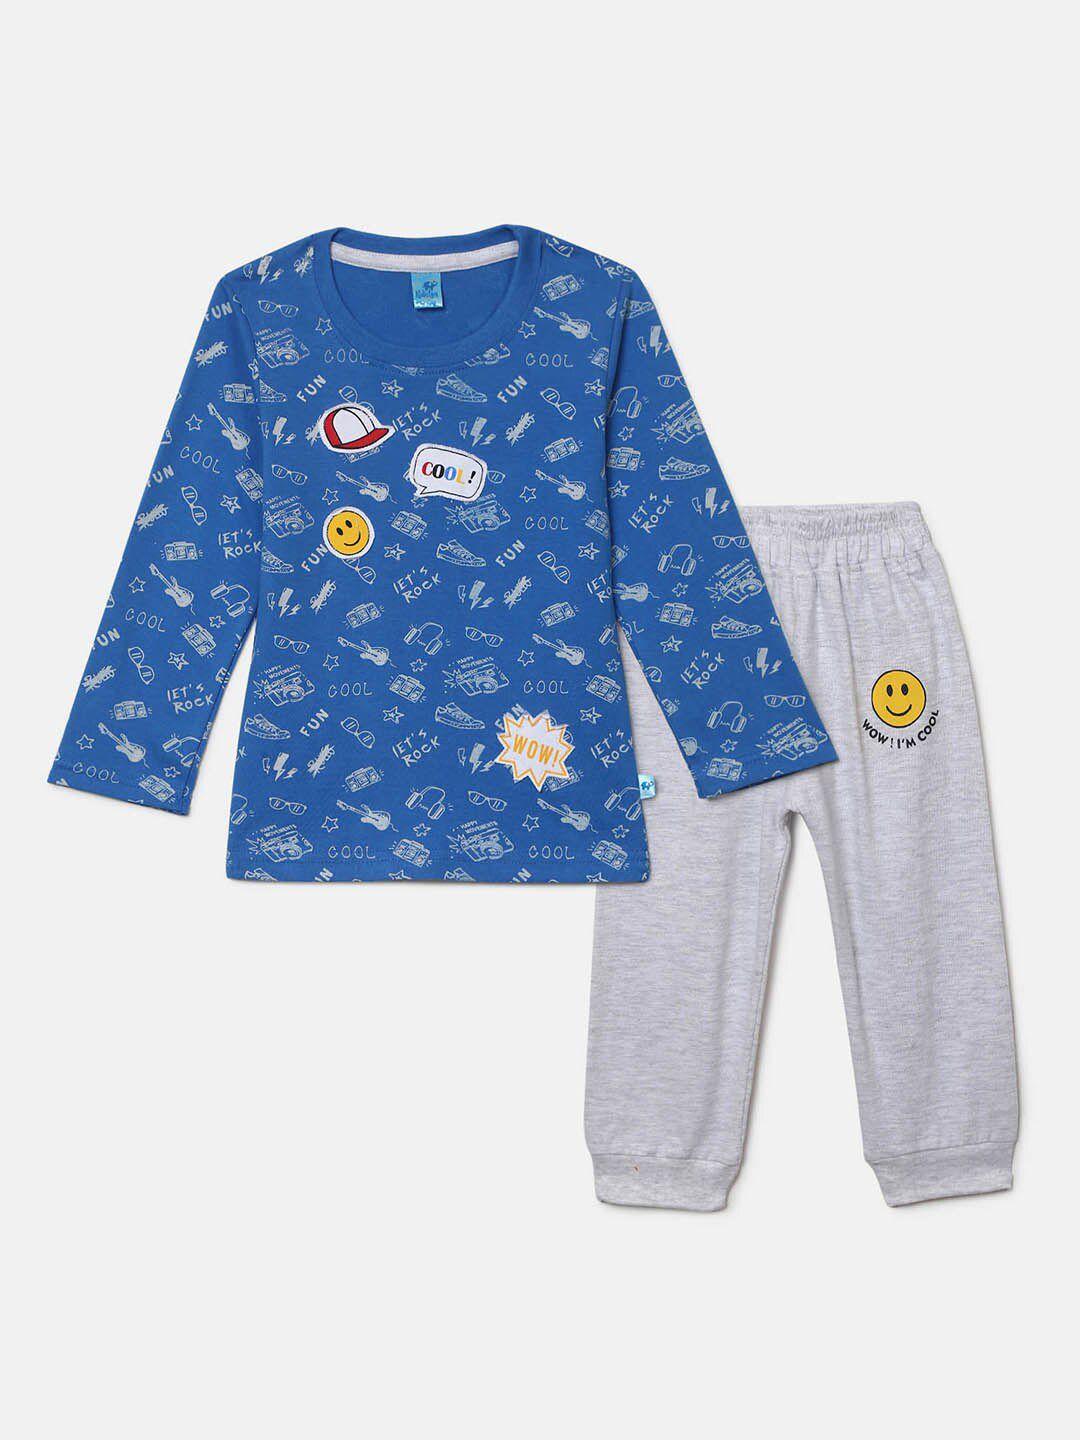 v-mart kids blue & grey printed pure cotton t-shirt with pyjama